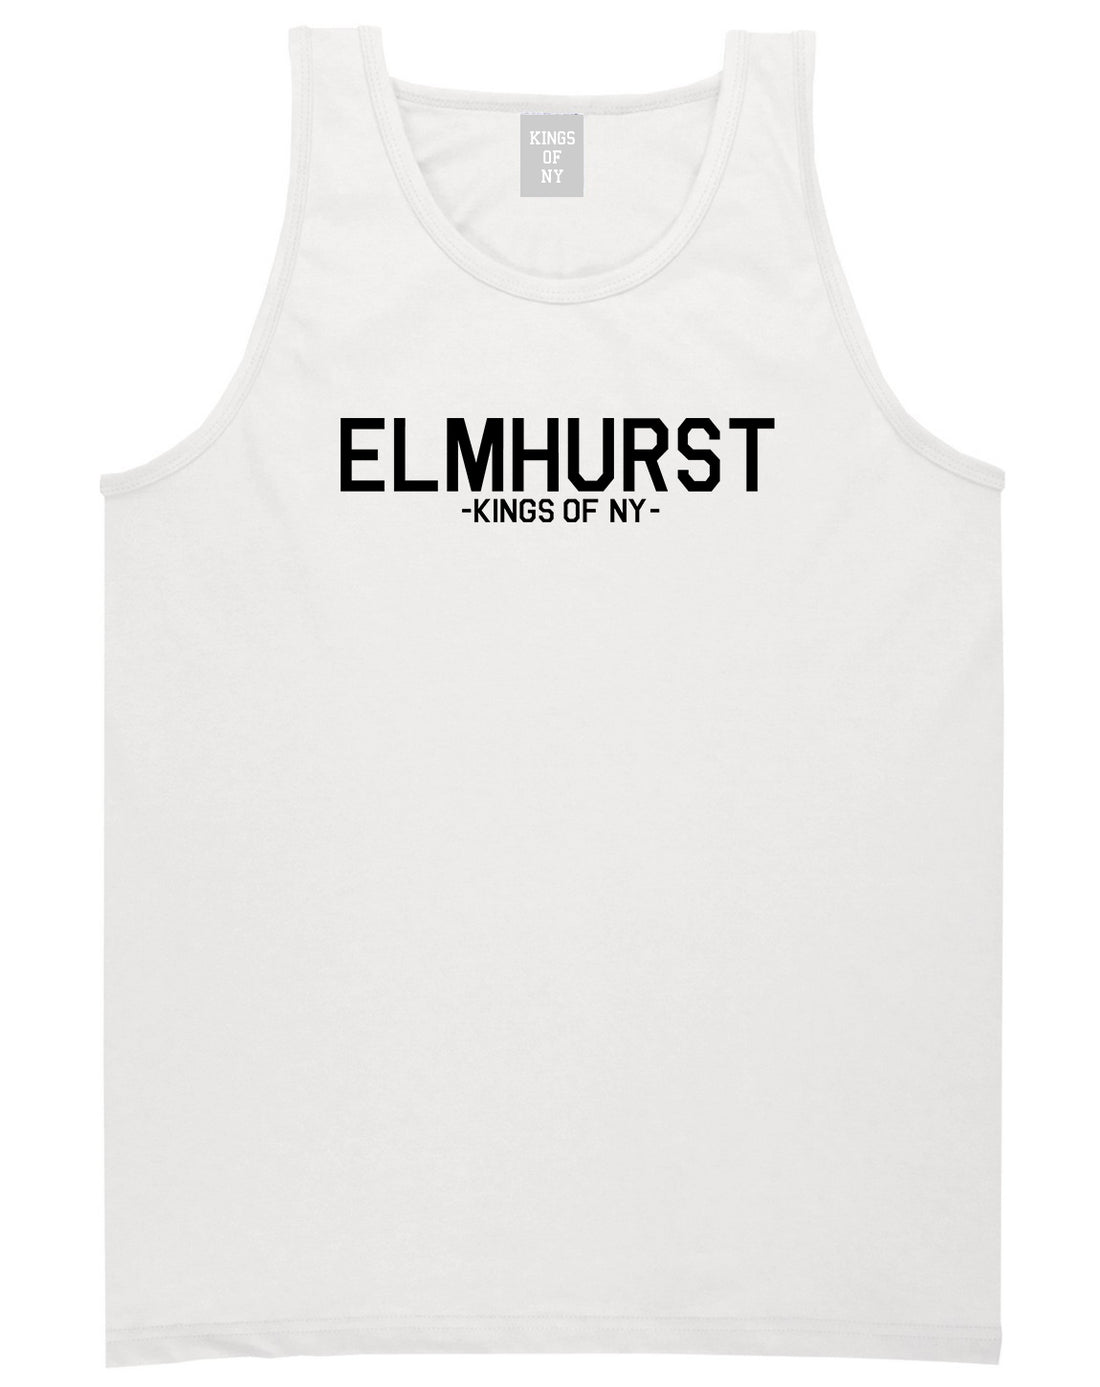 Elmhurst Queens New York Mens Tank Top Shirt White